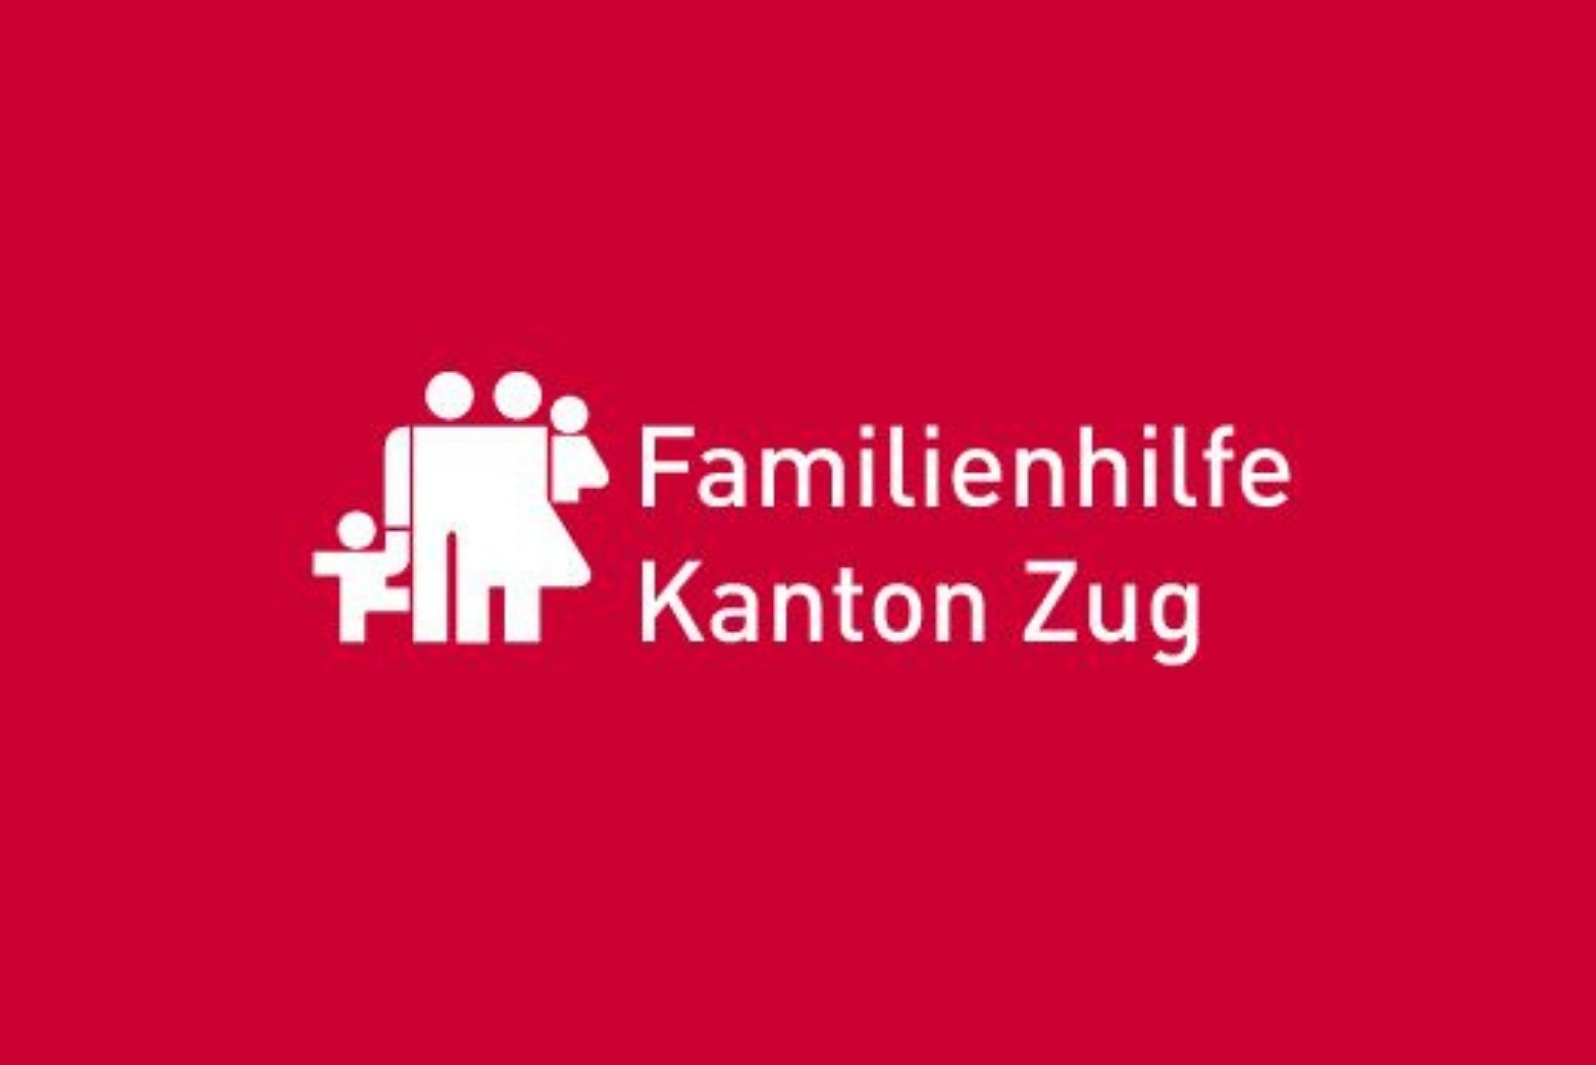 Familienhilfe Kanton Zug